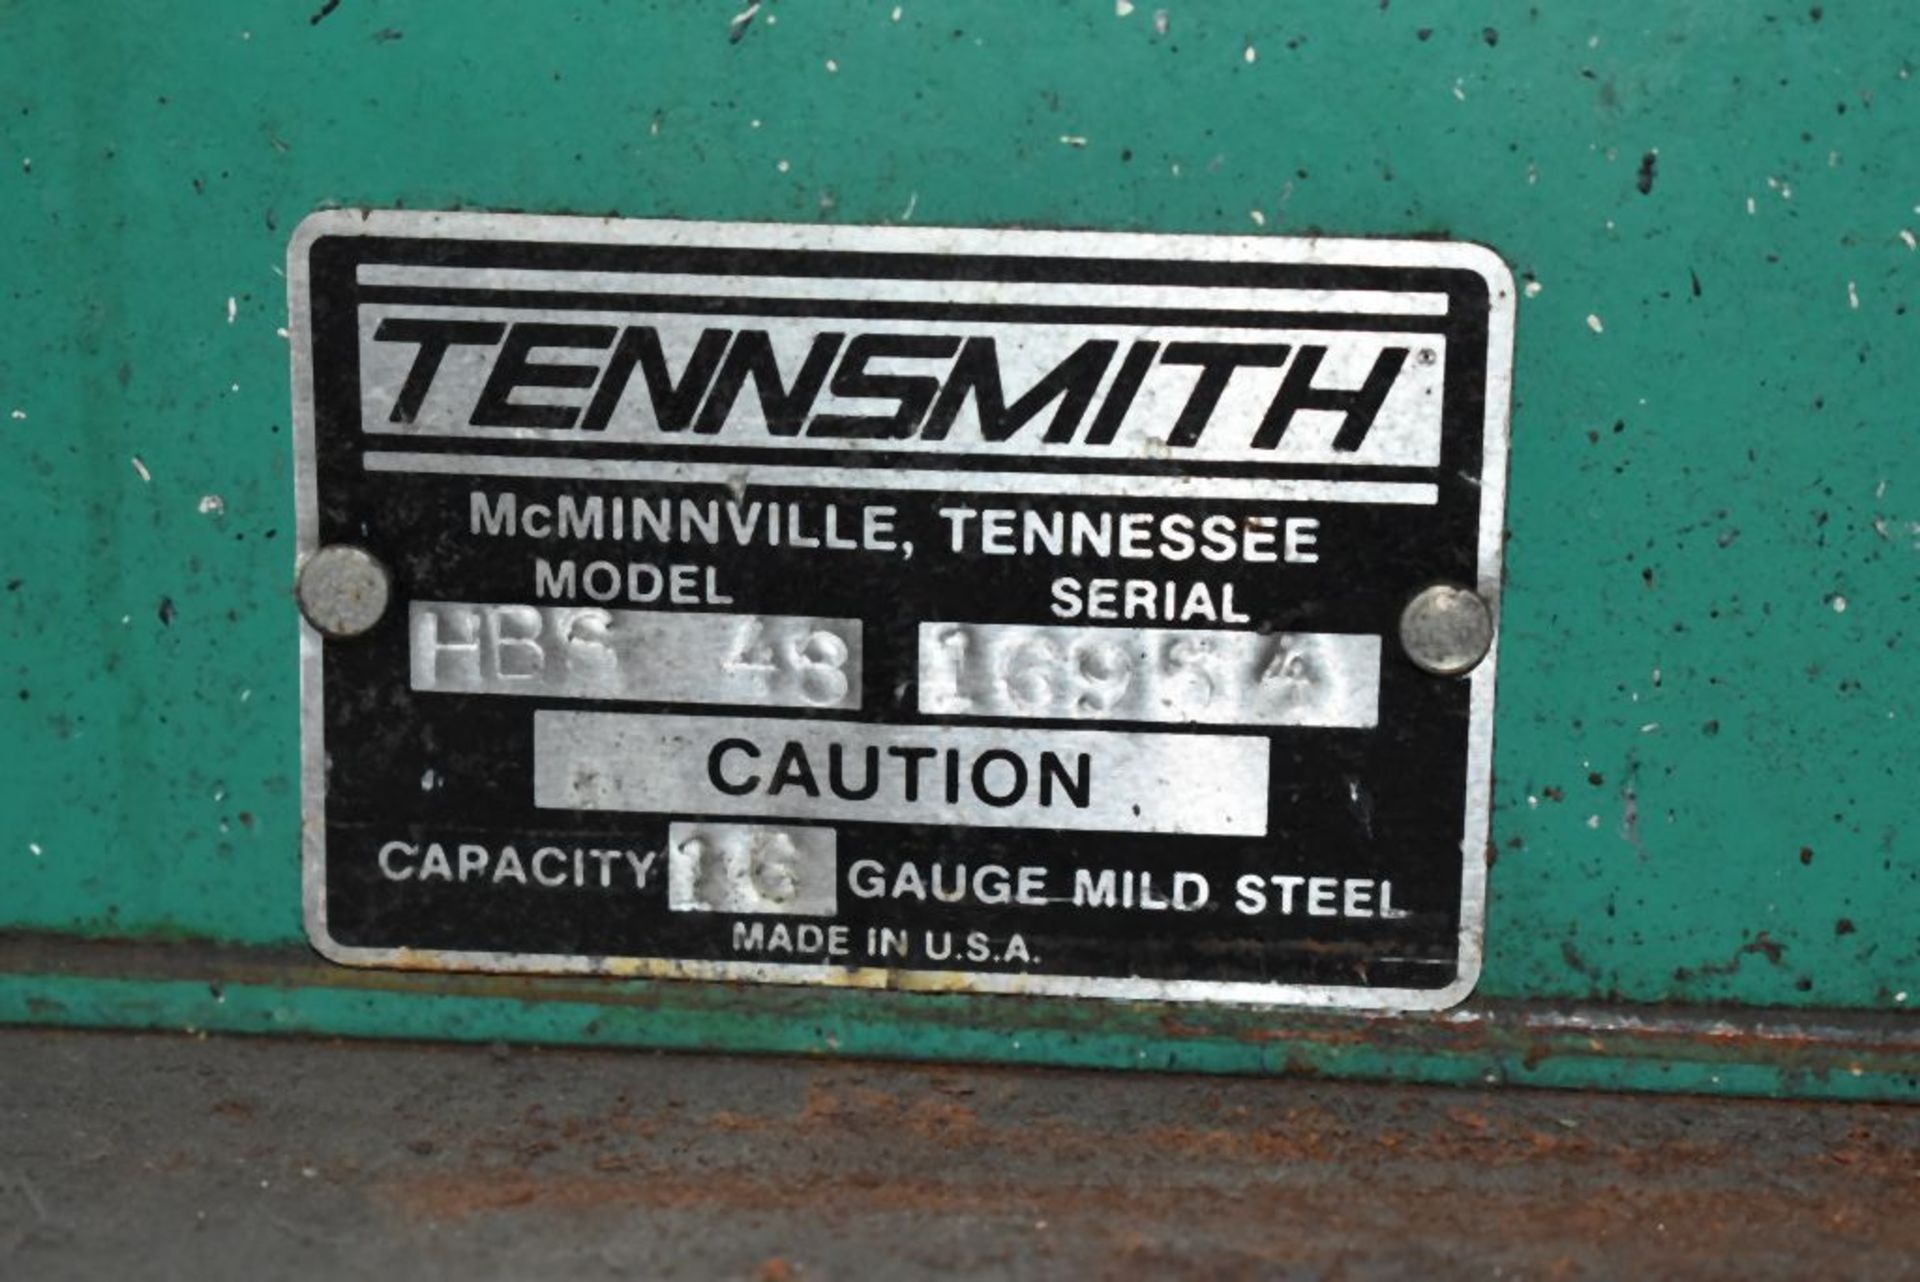 TENNSMITH 48" FINGER BRAKE, MODEL HBS-48, S/N: 16954, 16 GAUGE MILD STEEL CAPACITY, BENCH MOUNTED, - Image 2 of 2